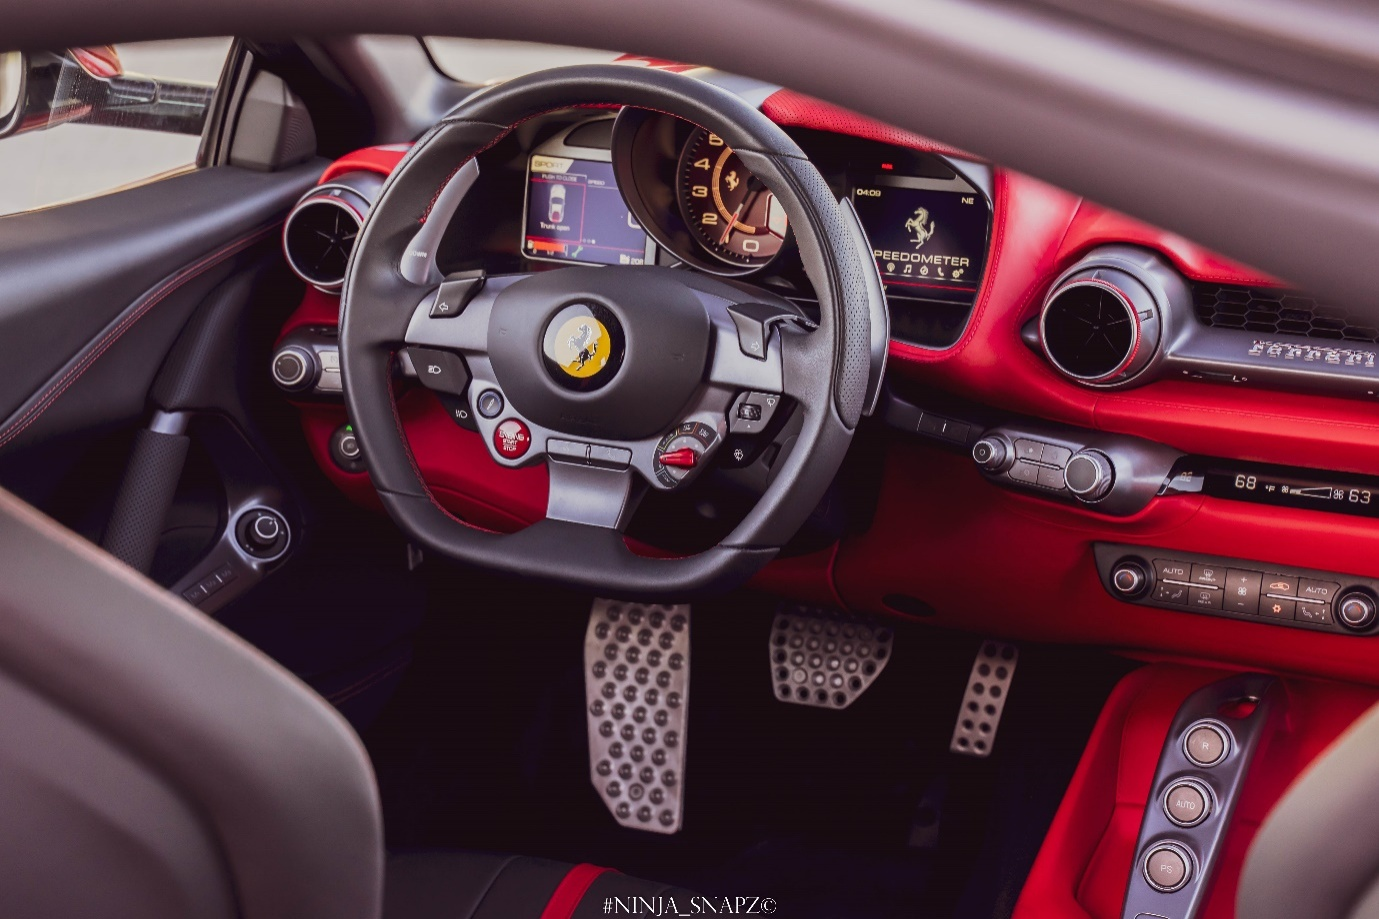 The interior of a Ferrari 812 Superfast.